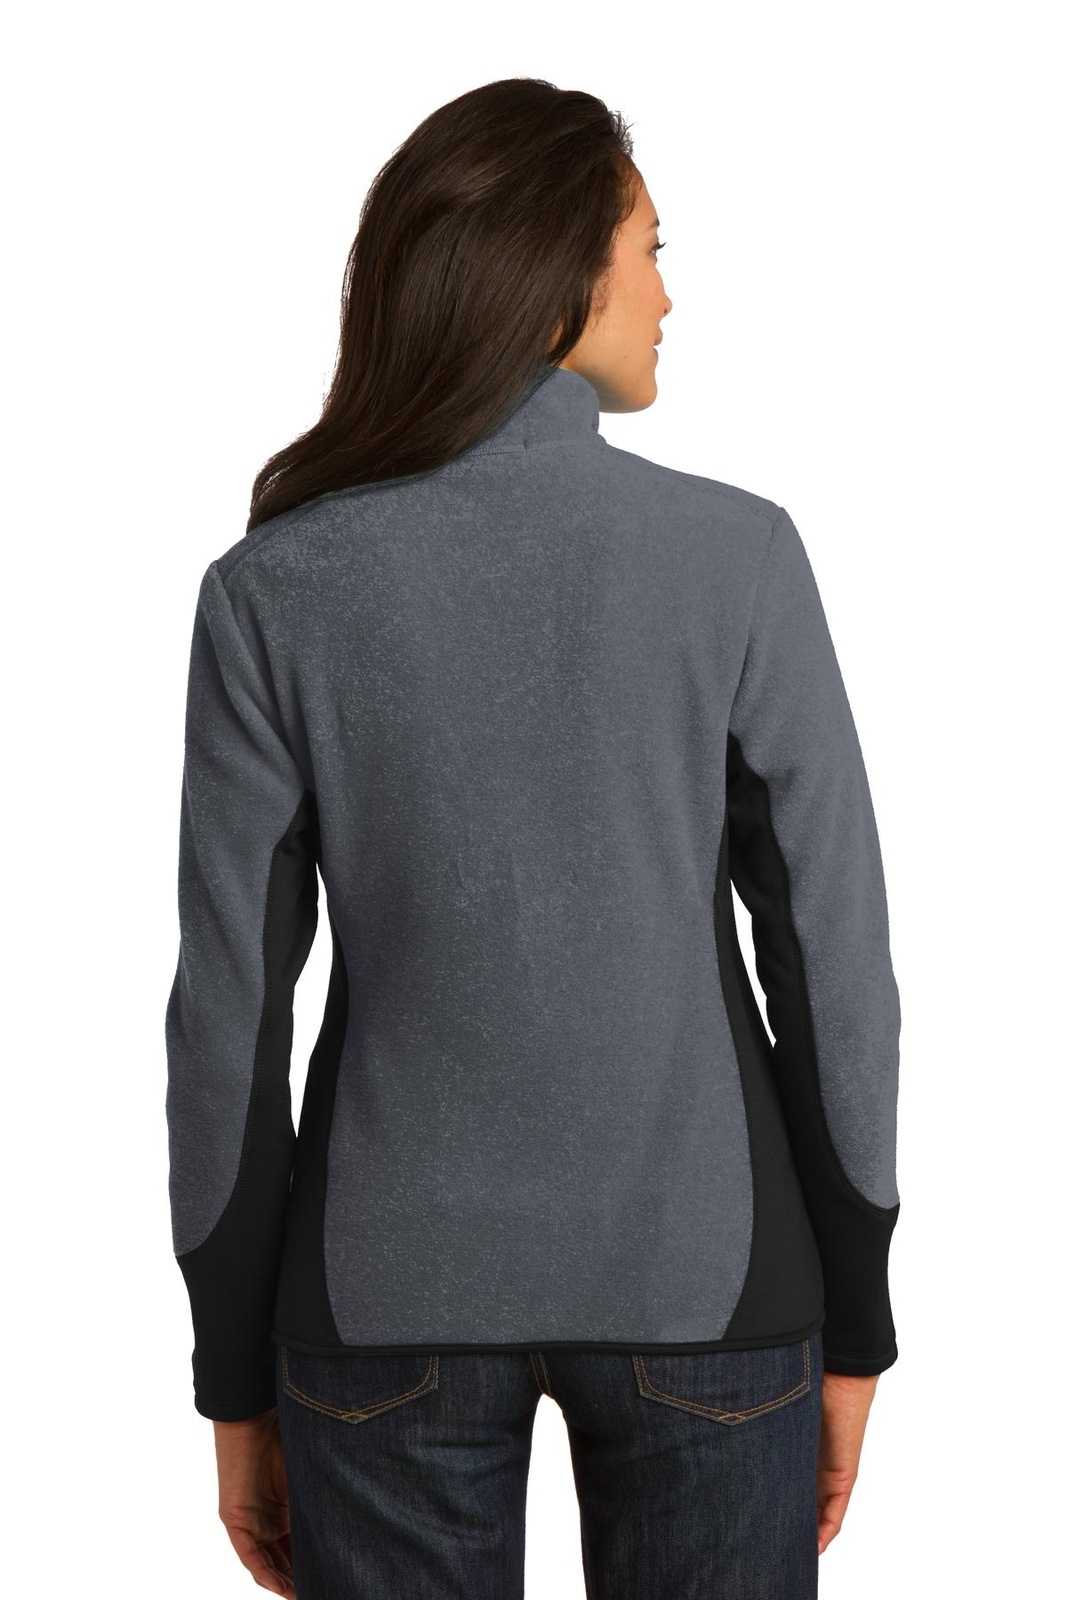 Port Authority L227 Ladies R-Tek Pro Fleece Full-Zip Jacket - Charcoal Heather Black - HIT a Double - 2